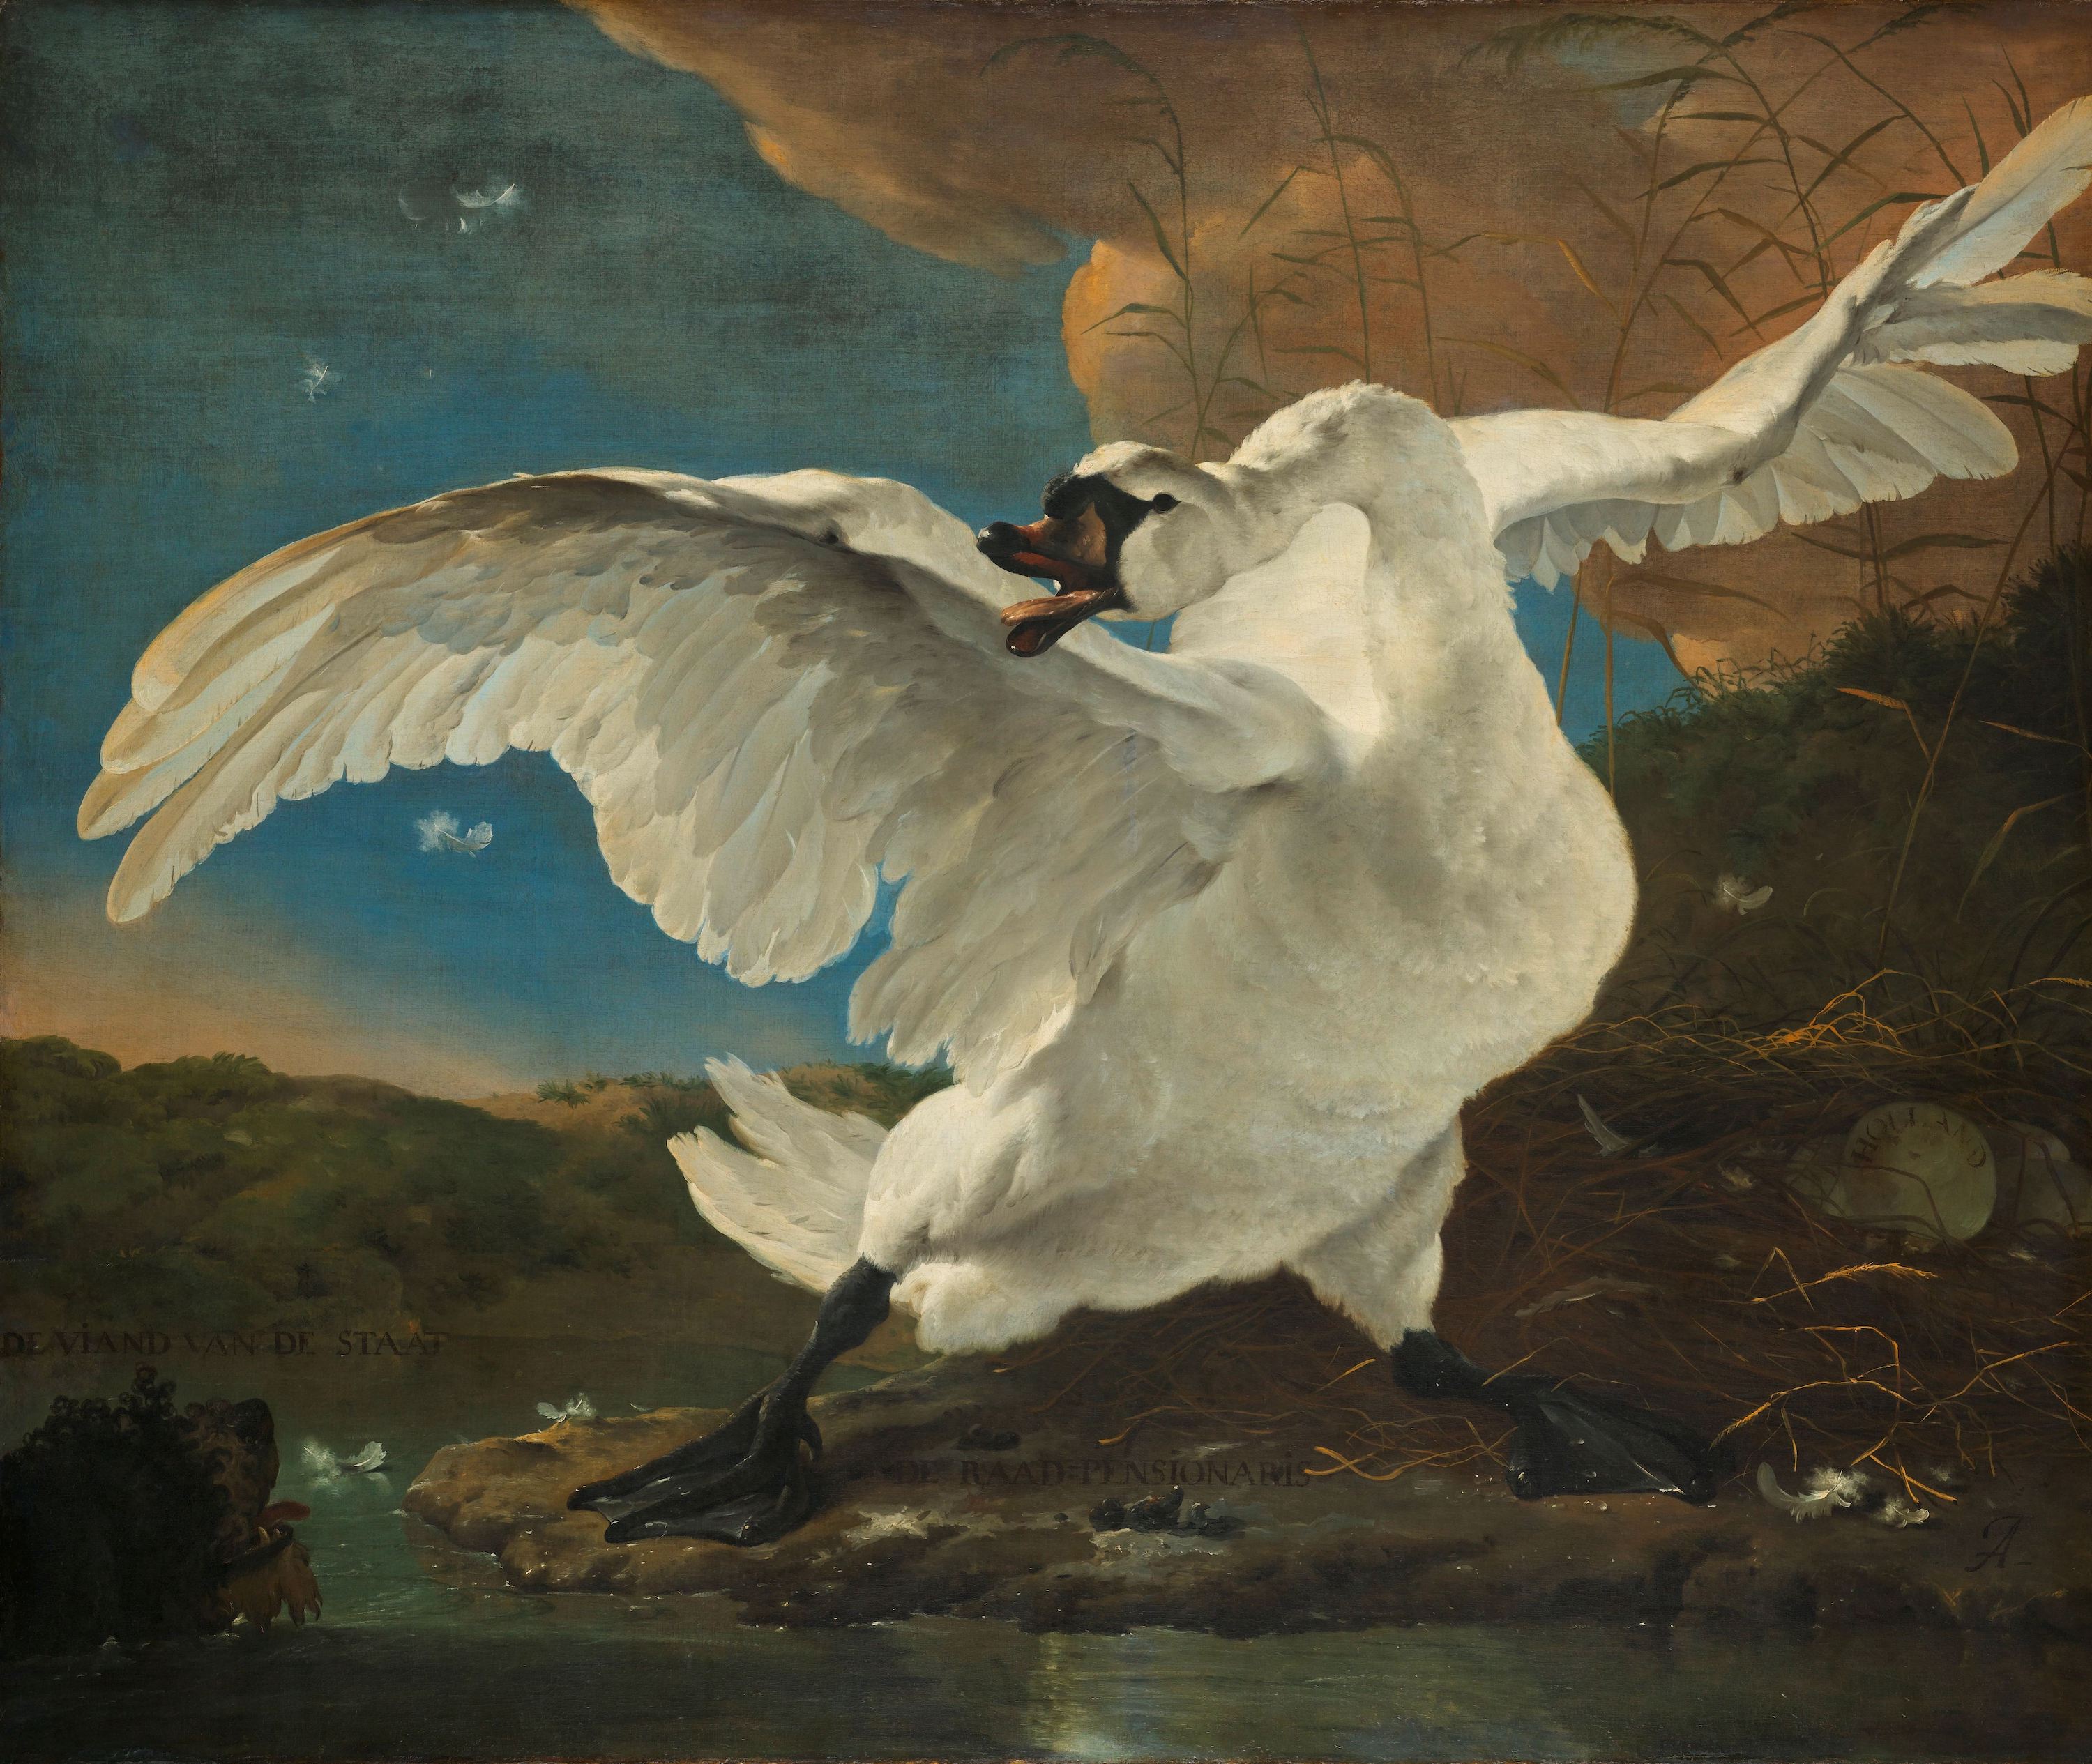 Threatened Swan by Jan Asselijn - c. 1650 - 144 × 171 cm Rijksmuseum